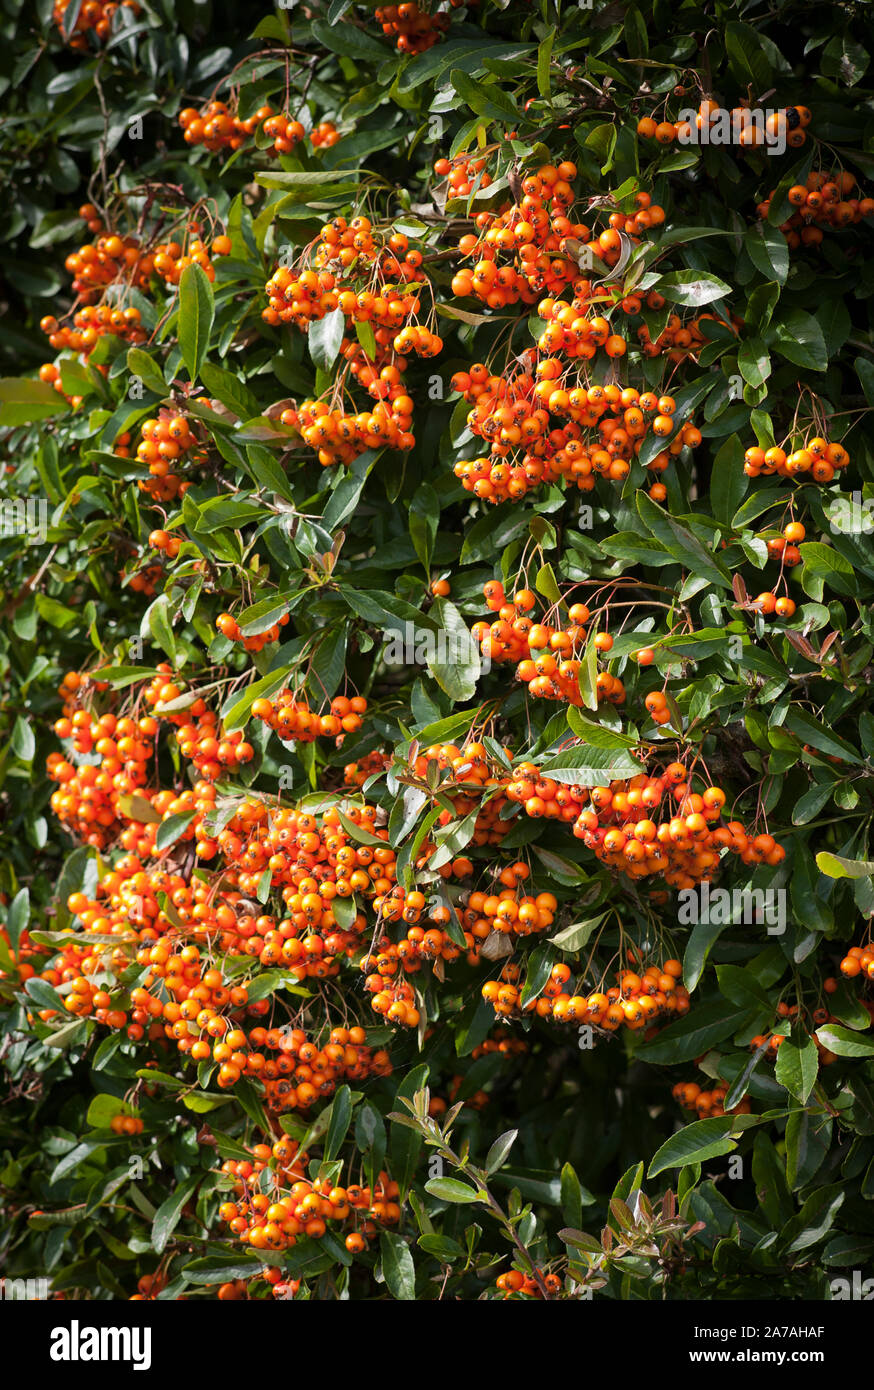 Evergreen shrub autumn uk hi-res stock photography and images - Alamy